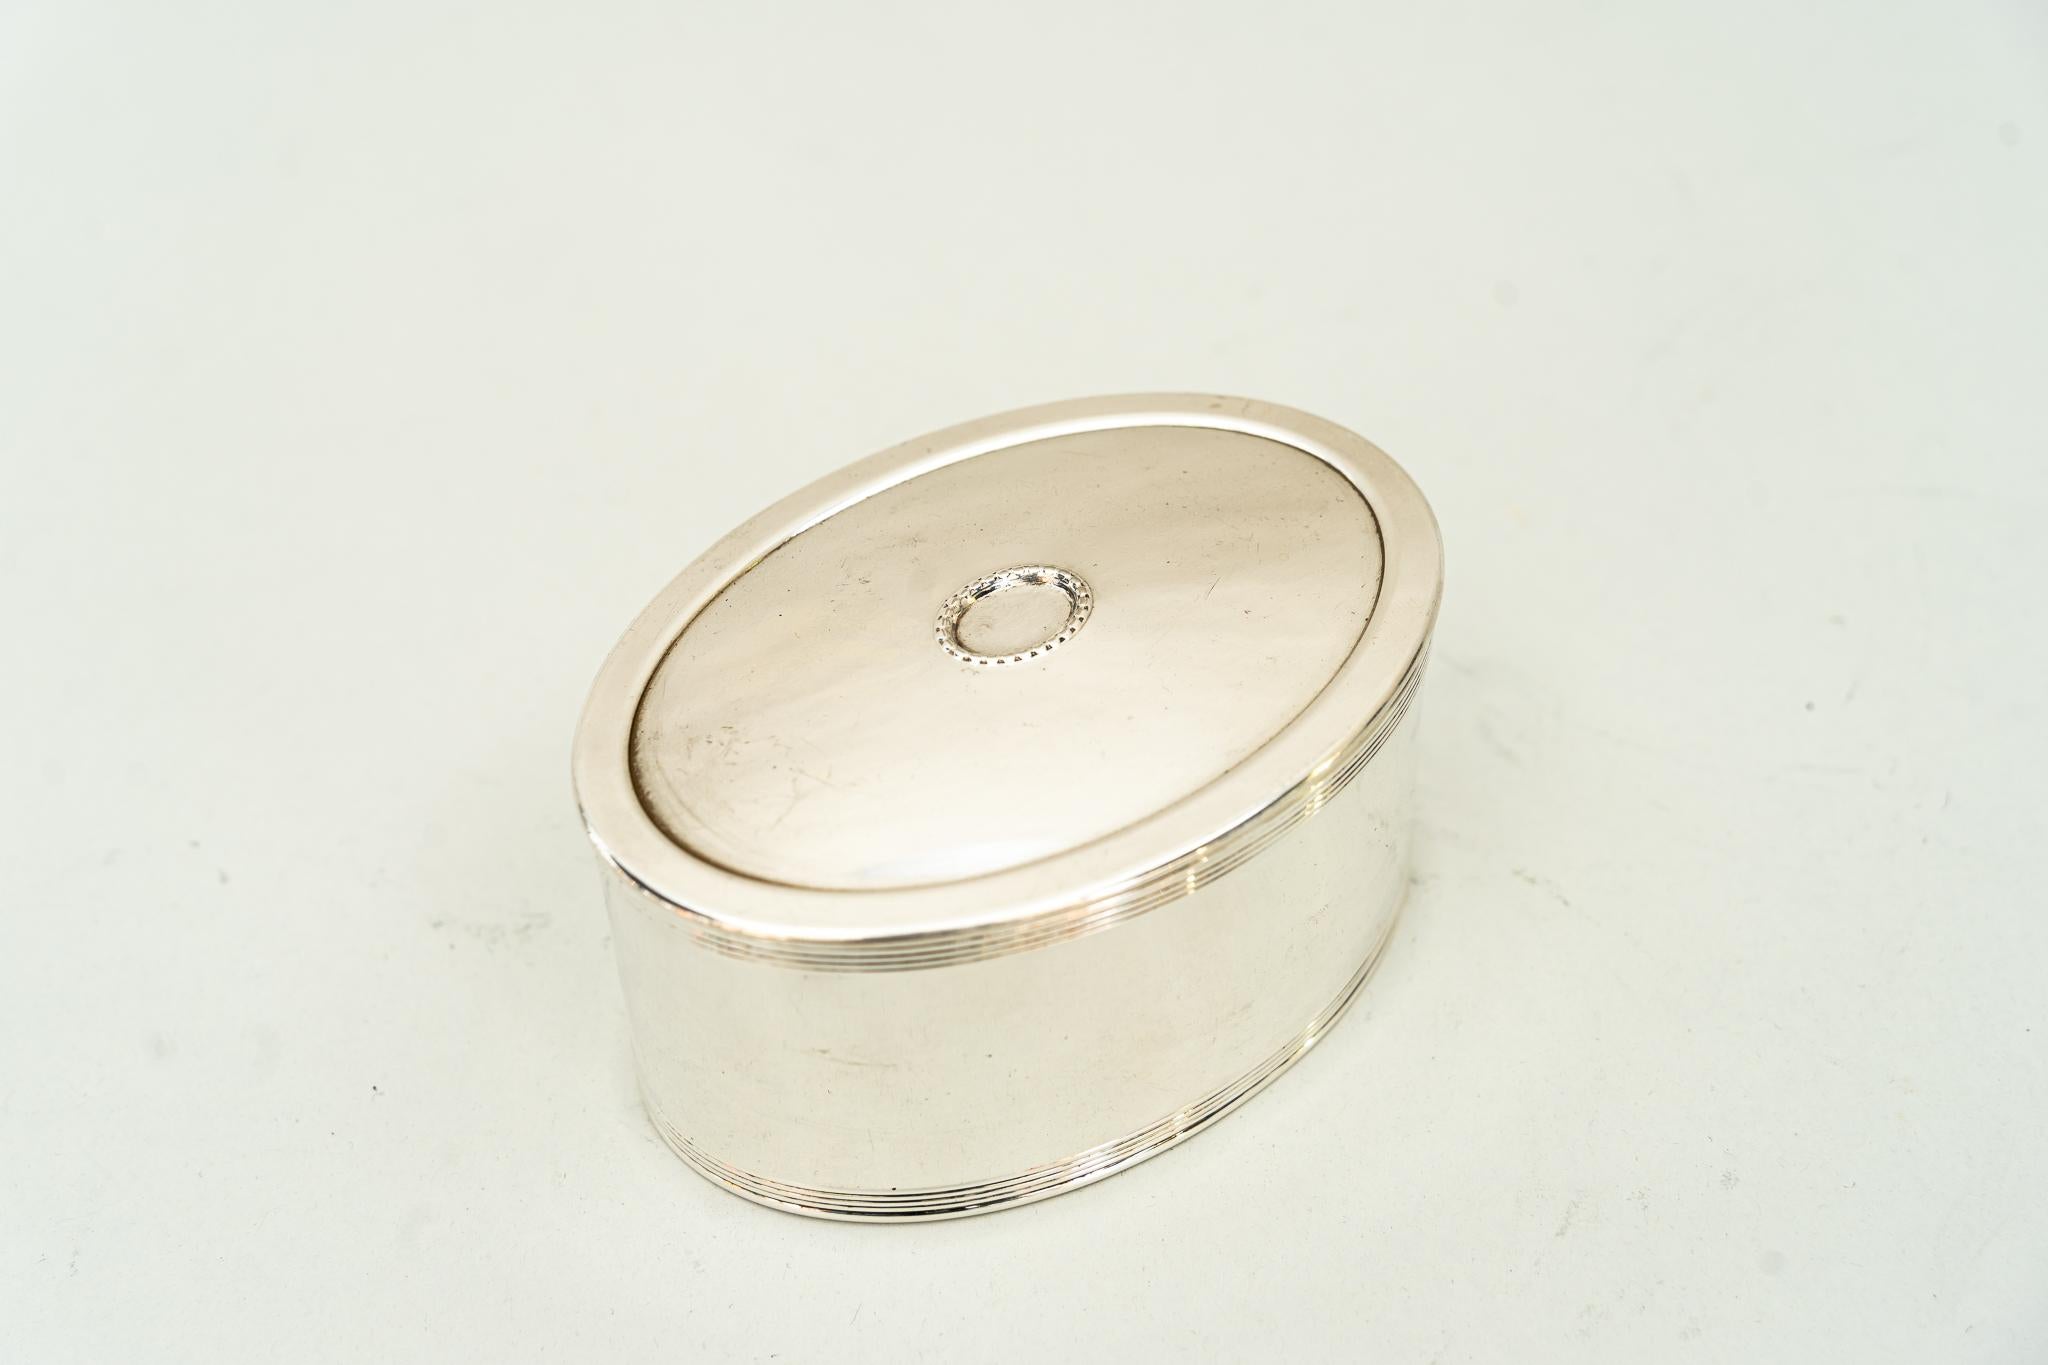 Small art deco jewerly box ( silvered ) around 1920s
Original condition.